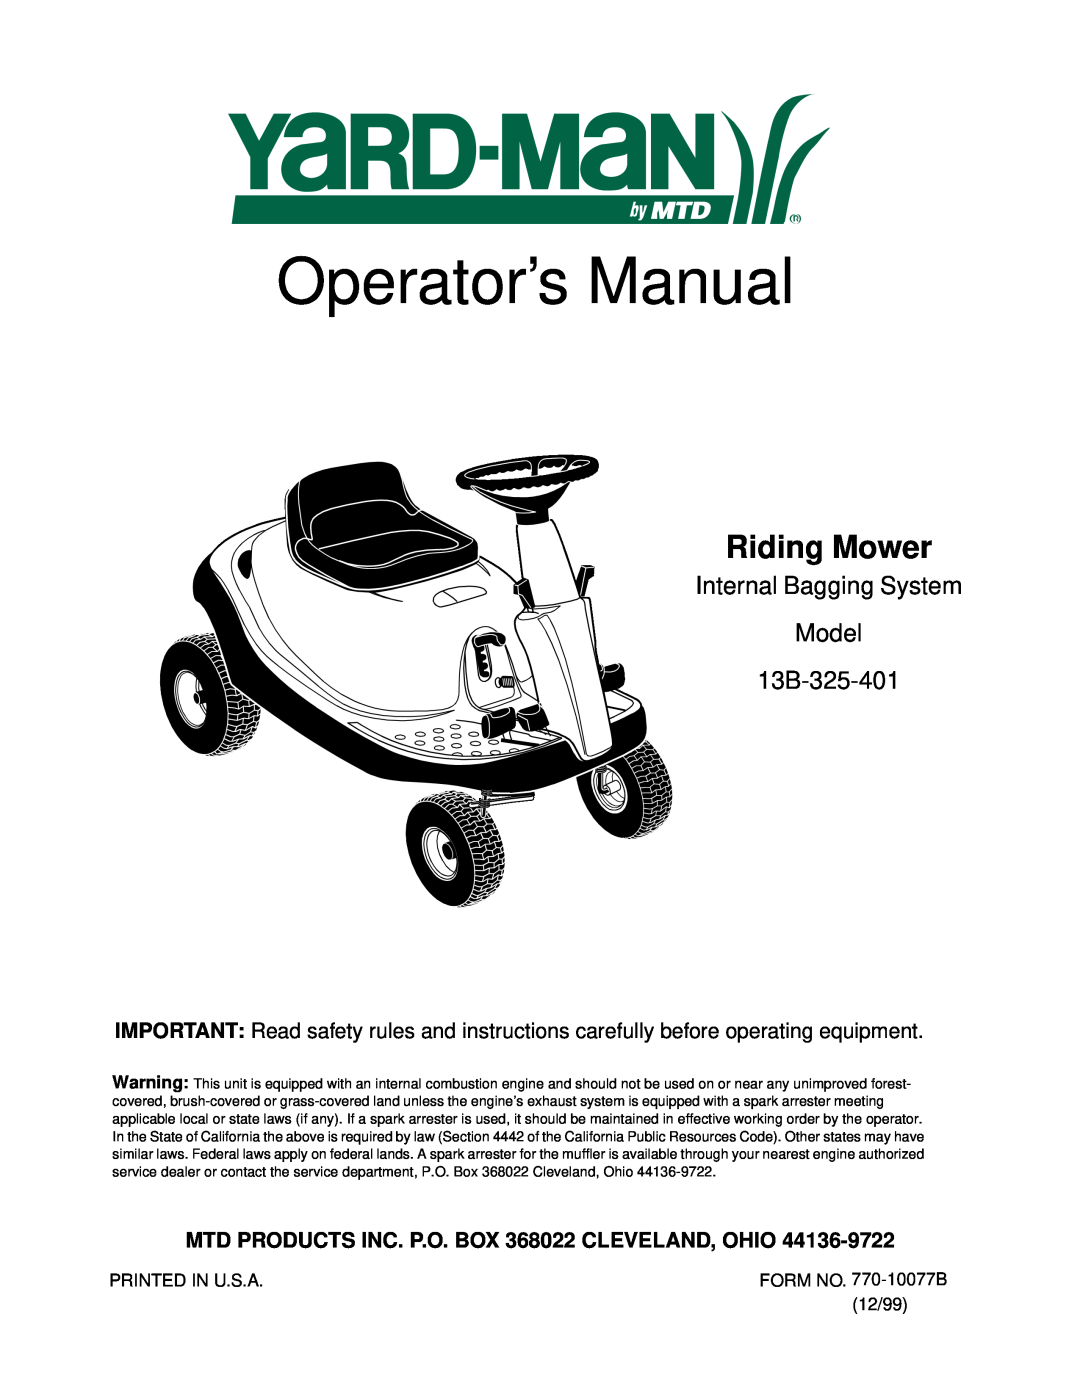 Yard-Man 13B-325-401 manual MTD PRODUCTS INC. P.O. BOX 368022 CLEVELAND, OHIO, Operator’s Manual, Riding Mower 